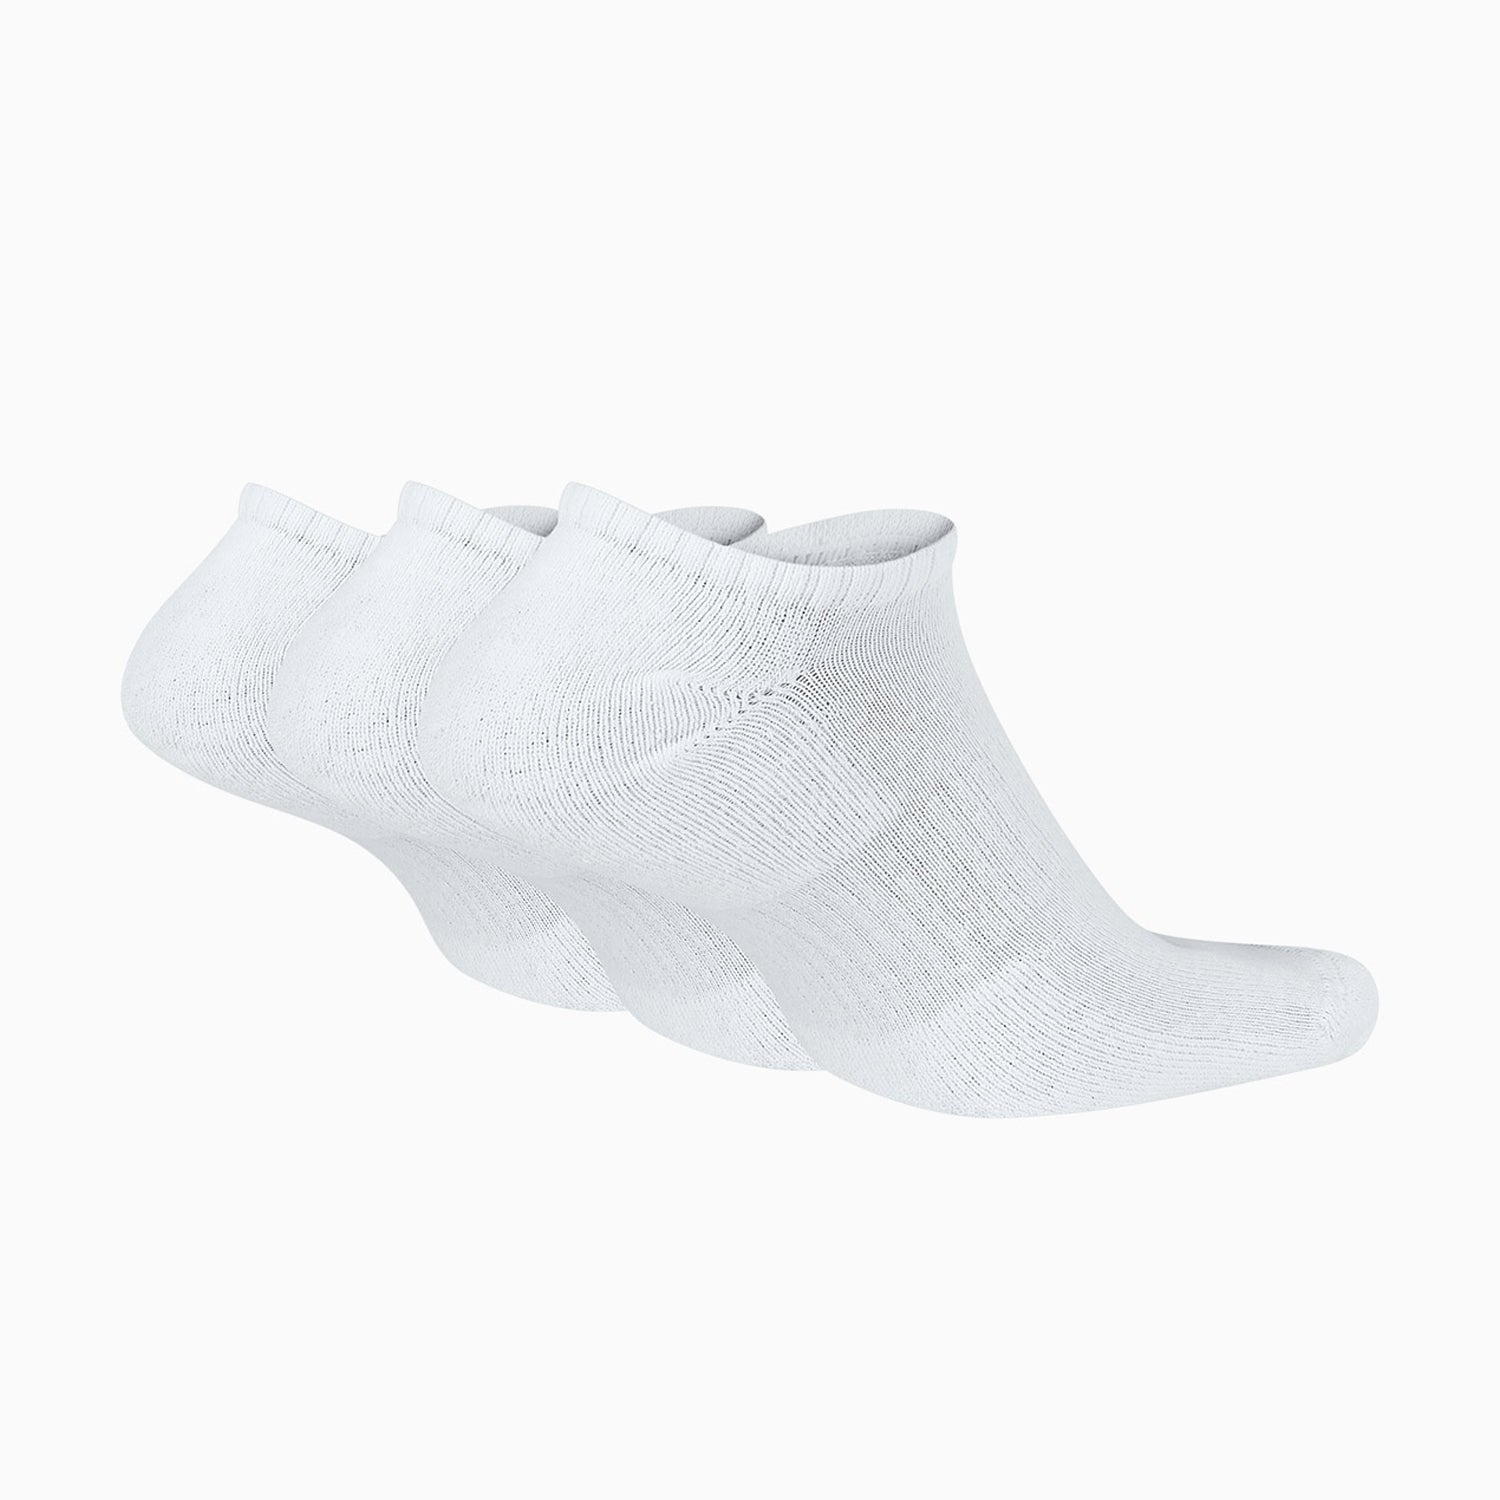 nike-mens-everyday-cushioned-socks-3-pairs-sx7673-100